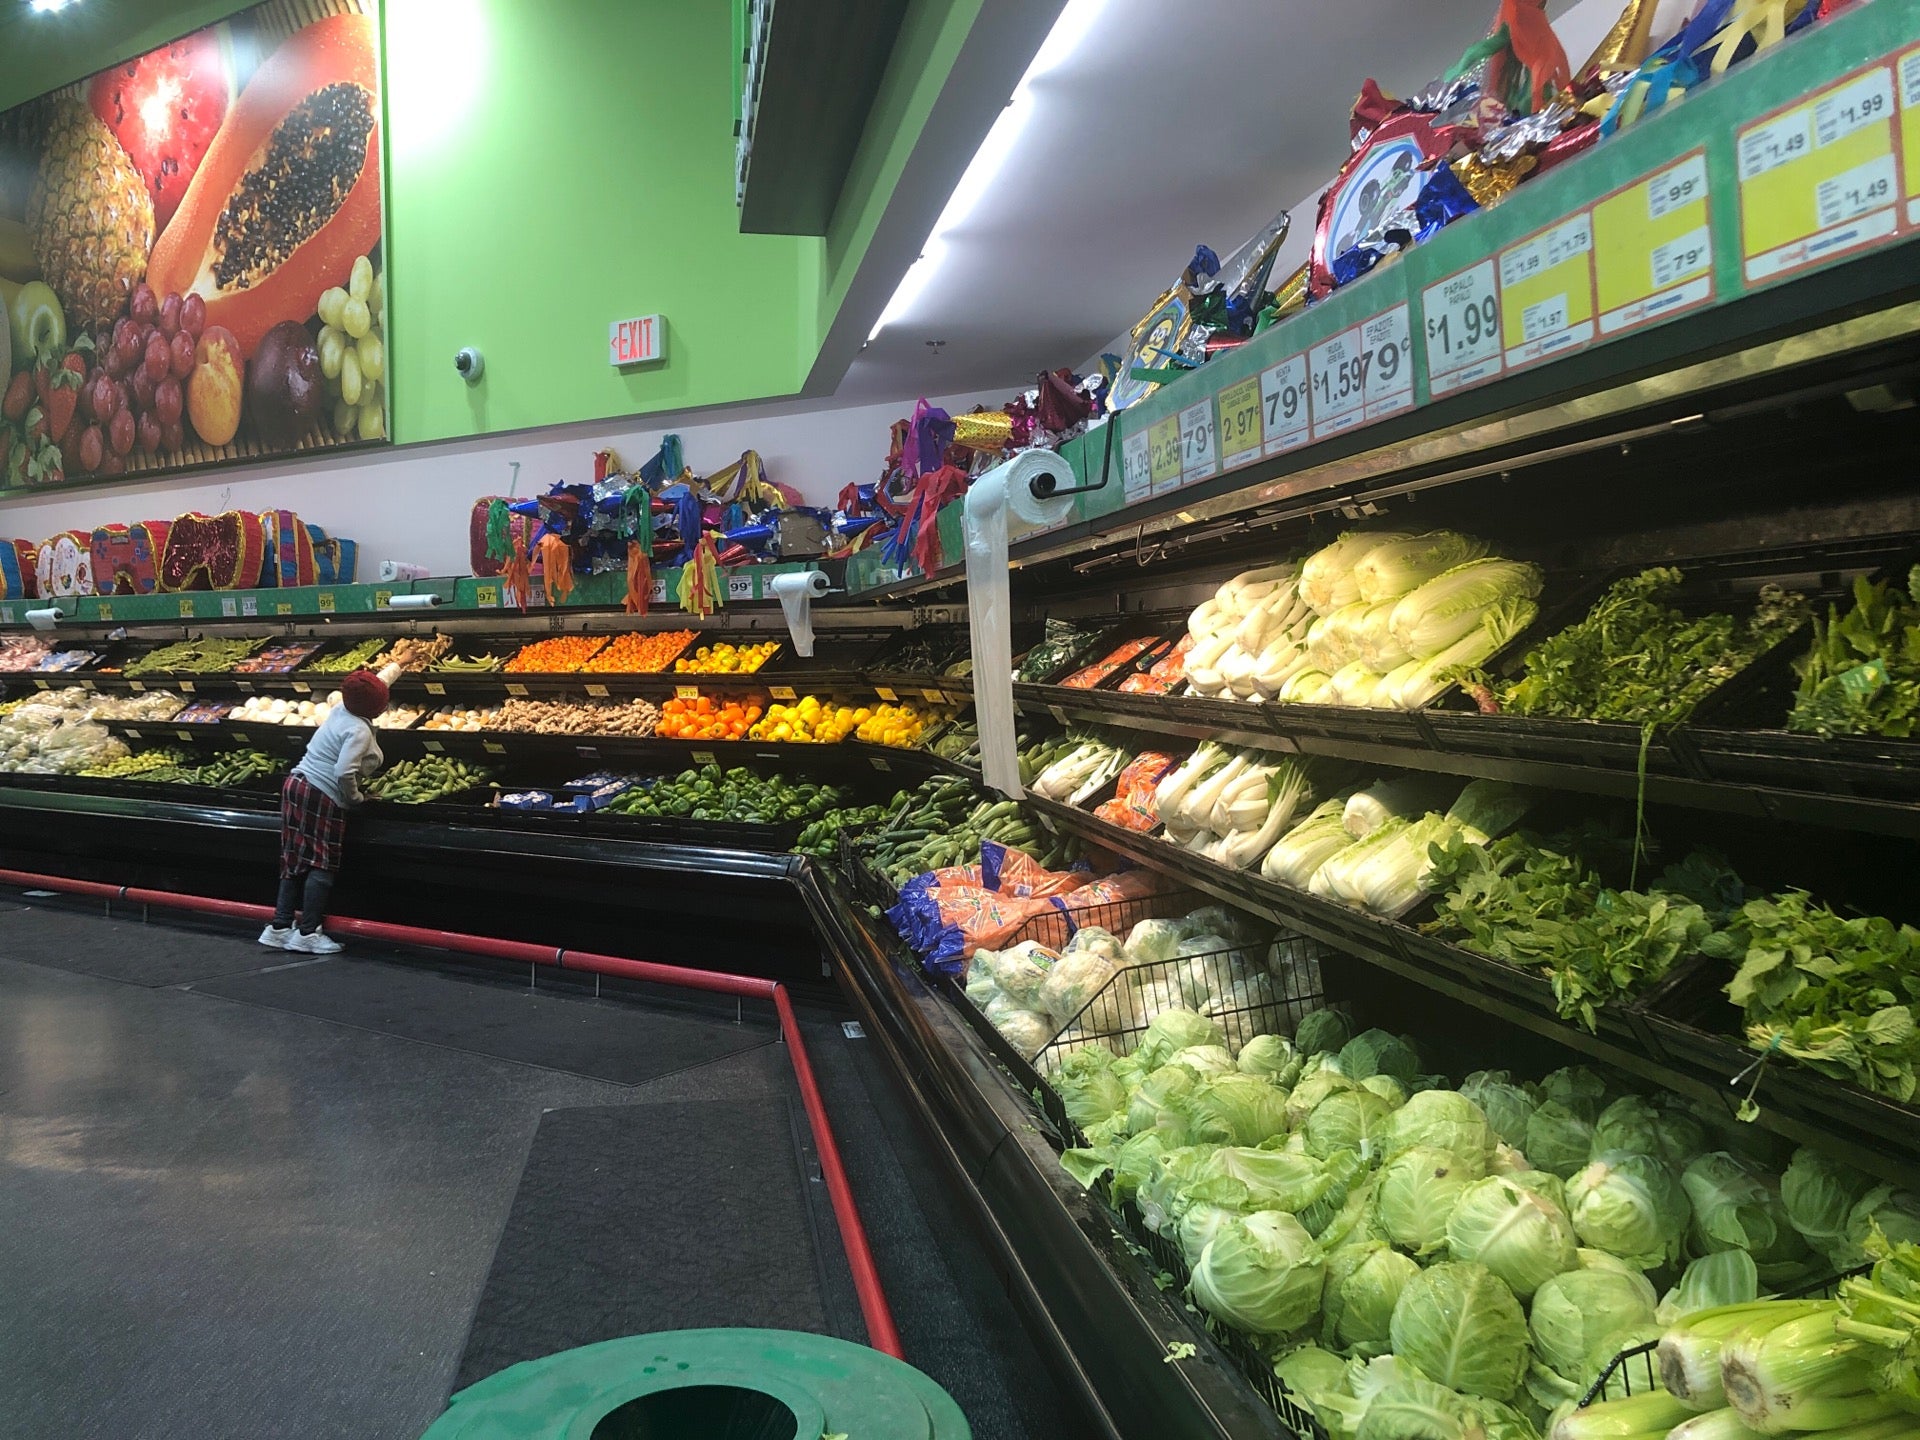 El Super Opens its Fourth Supermarket in Las Vegas - Abasto